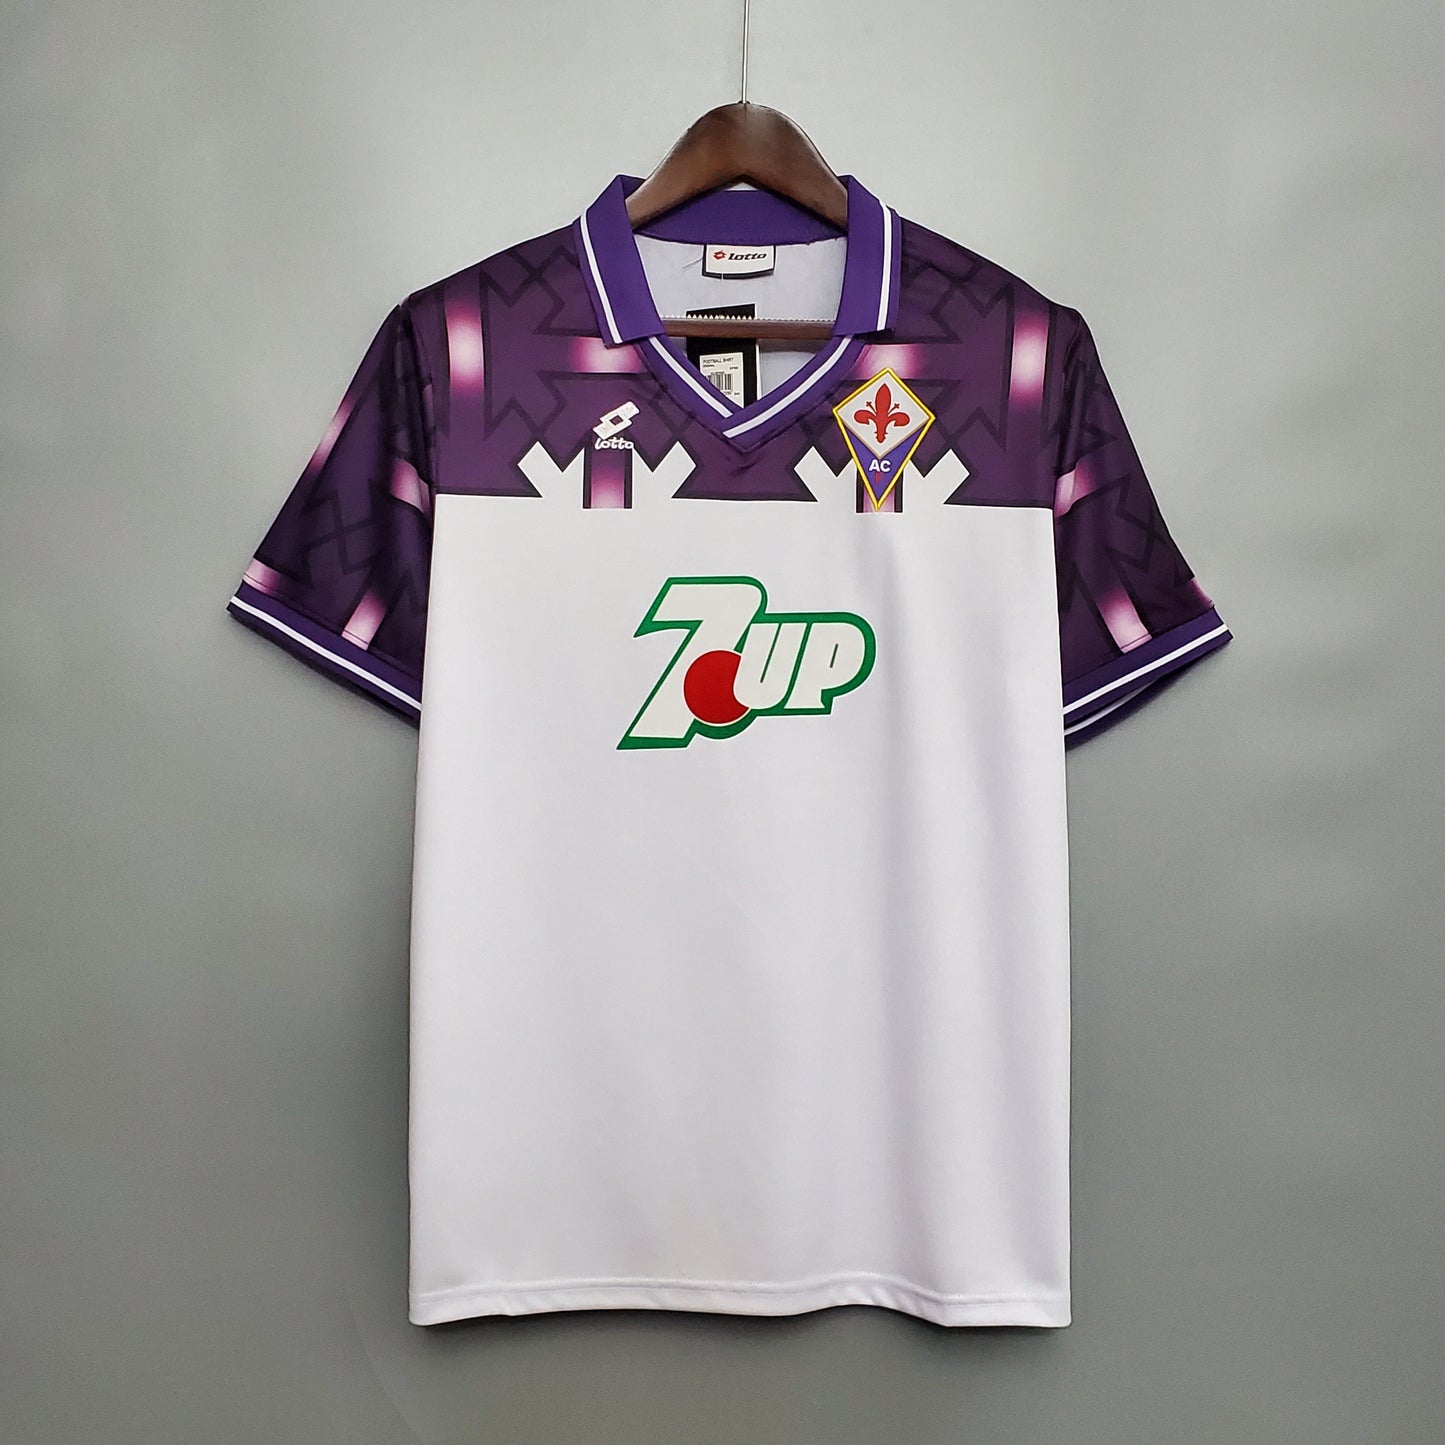 Fiorentina Maglia Away 1992/93